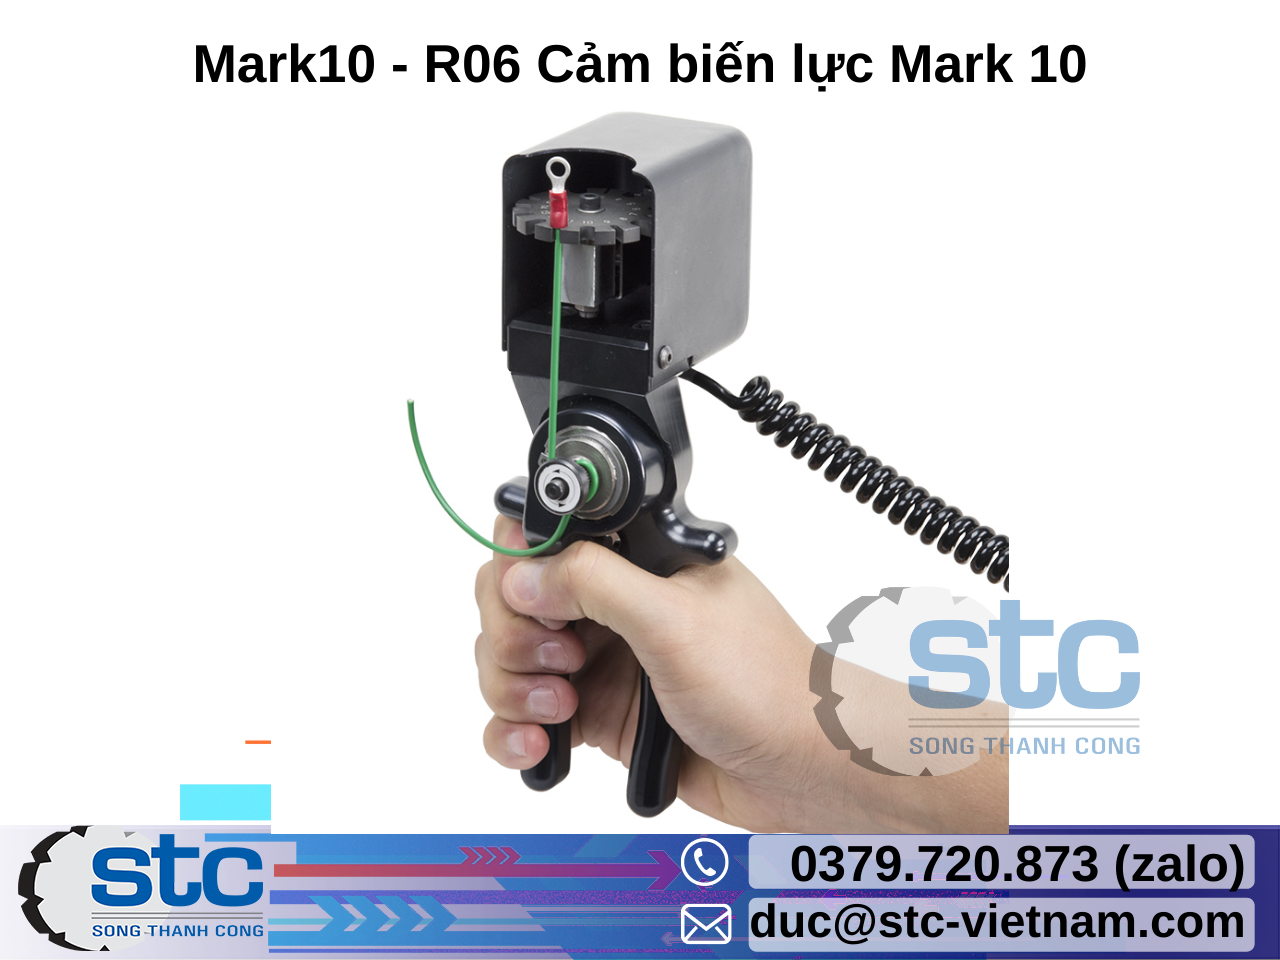 mark10-r06-cam-bien-luc-mark-10.png